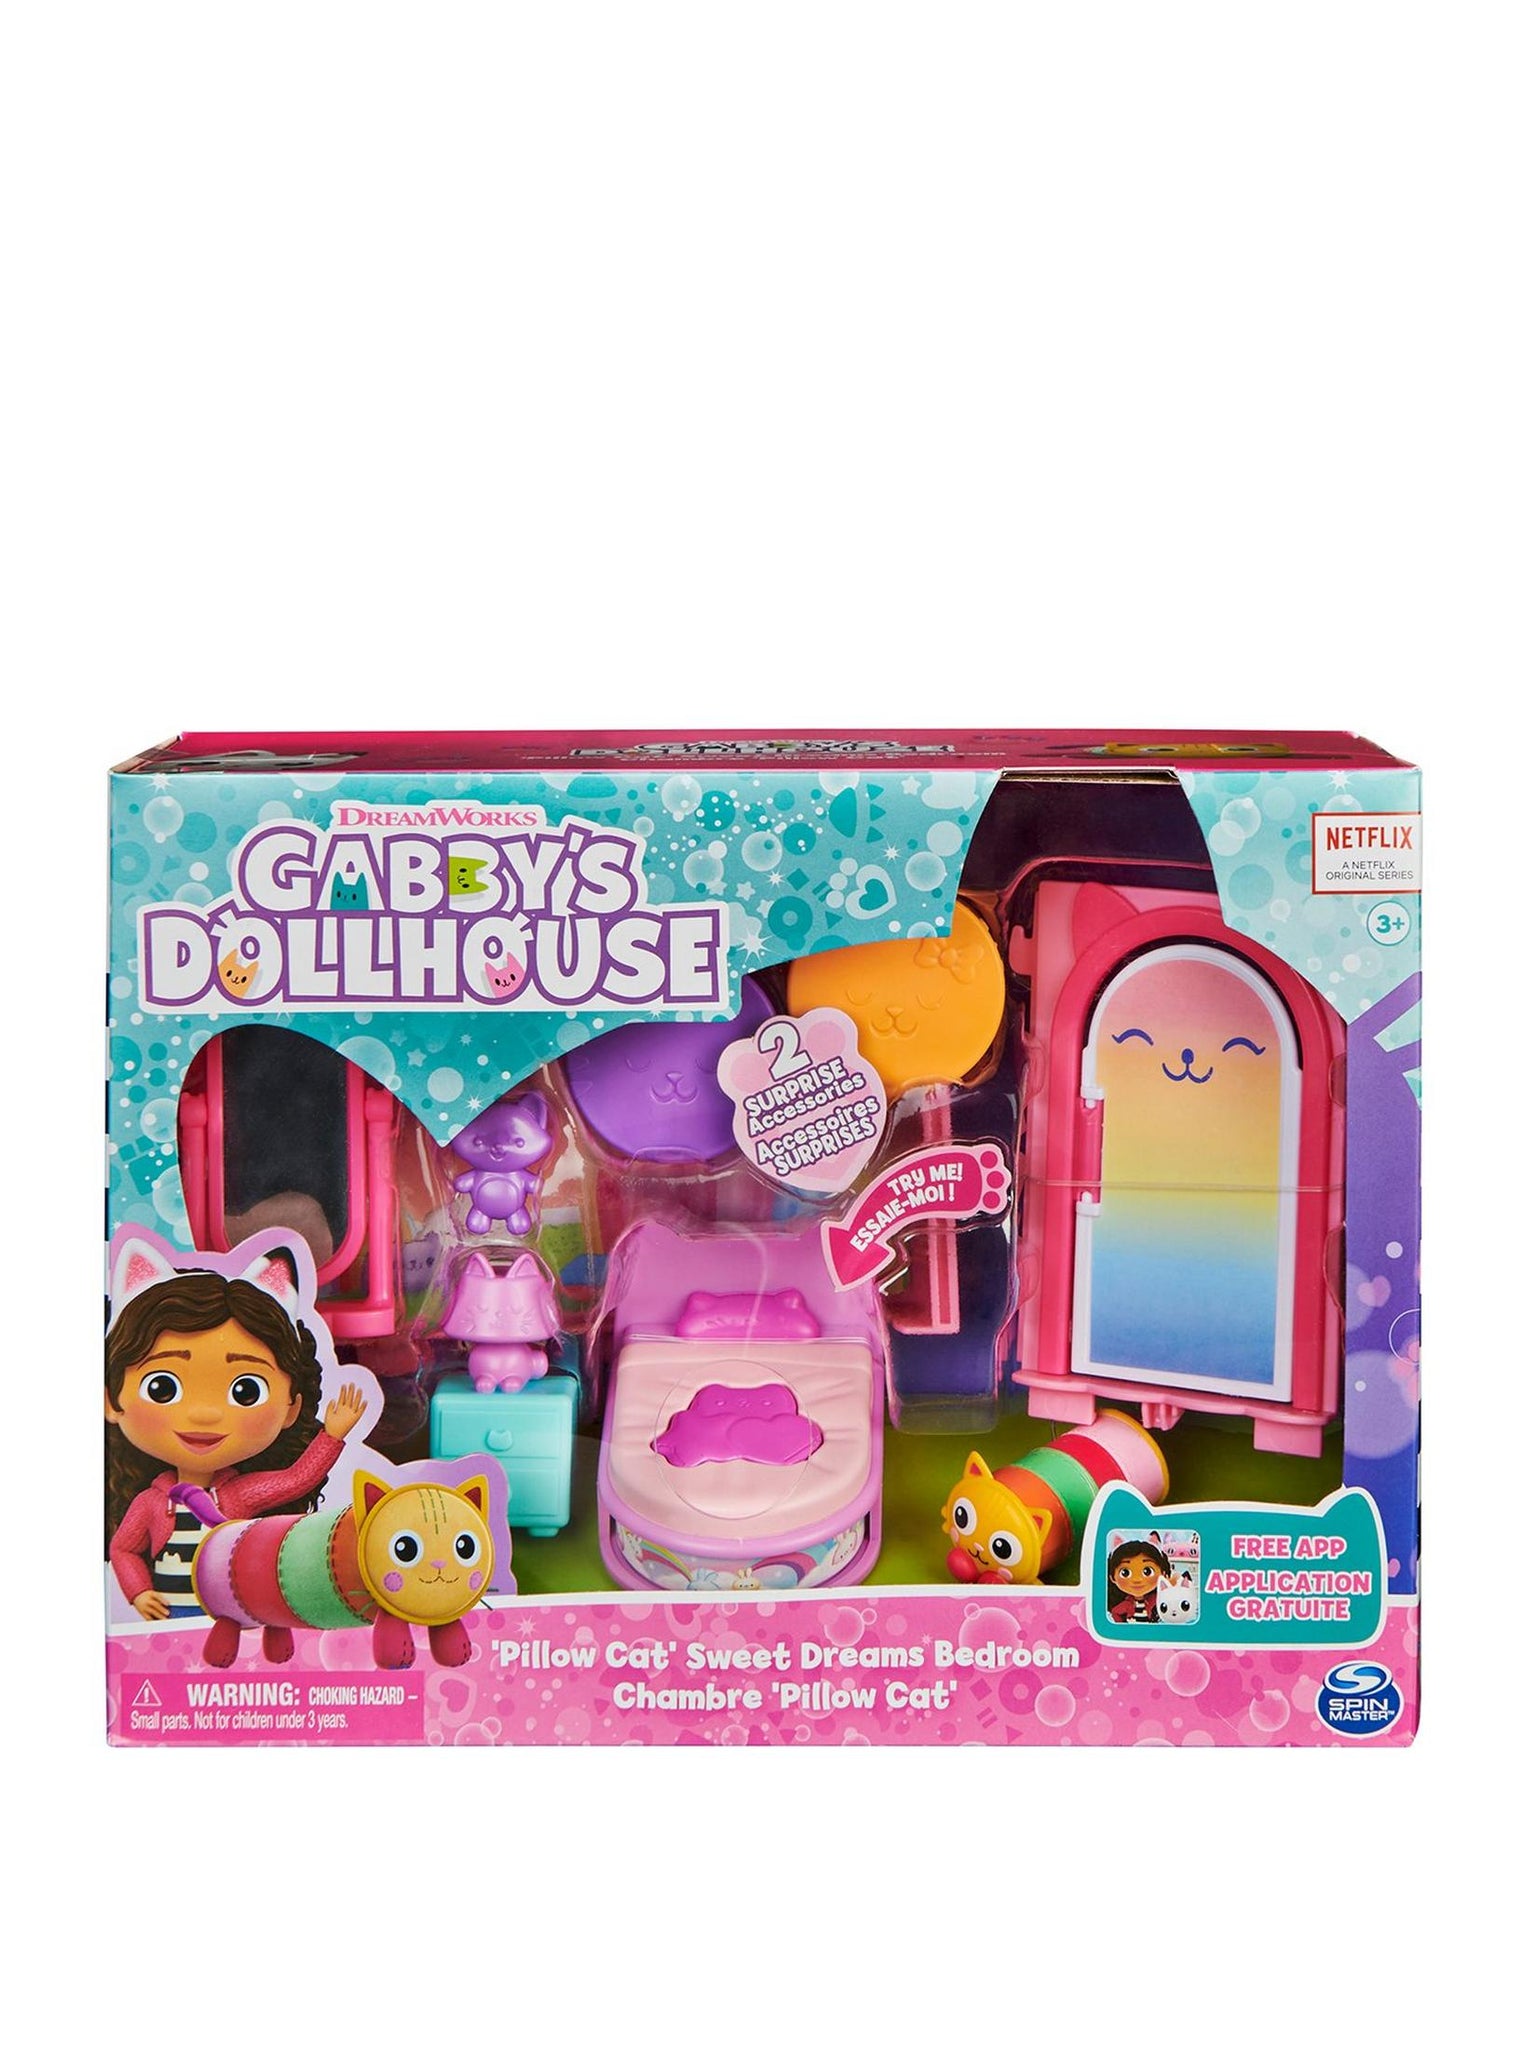 Gabby's Dollhouse - Pillow Cat' Sweet Dreams Bedroom